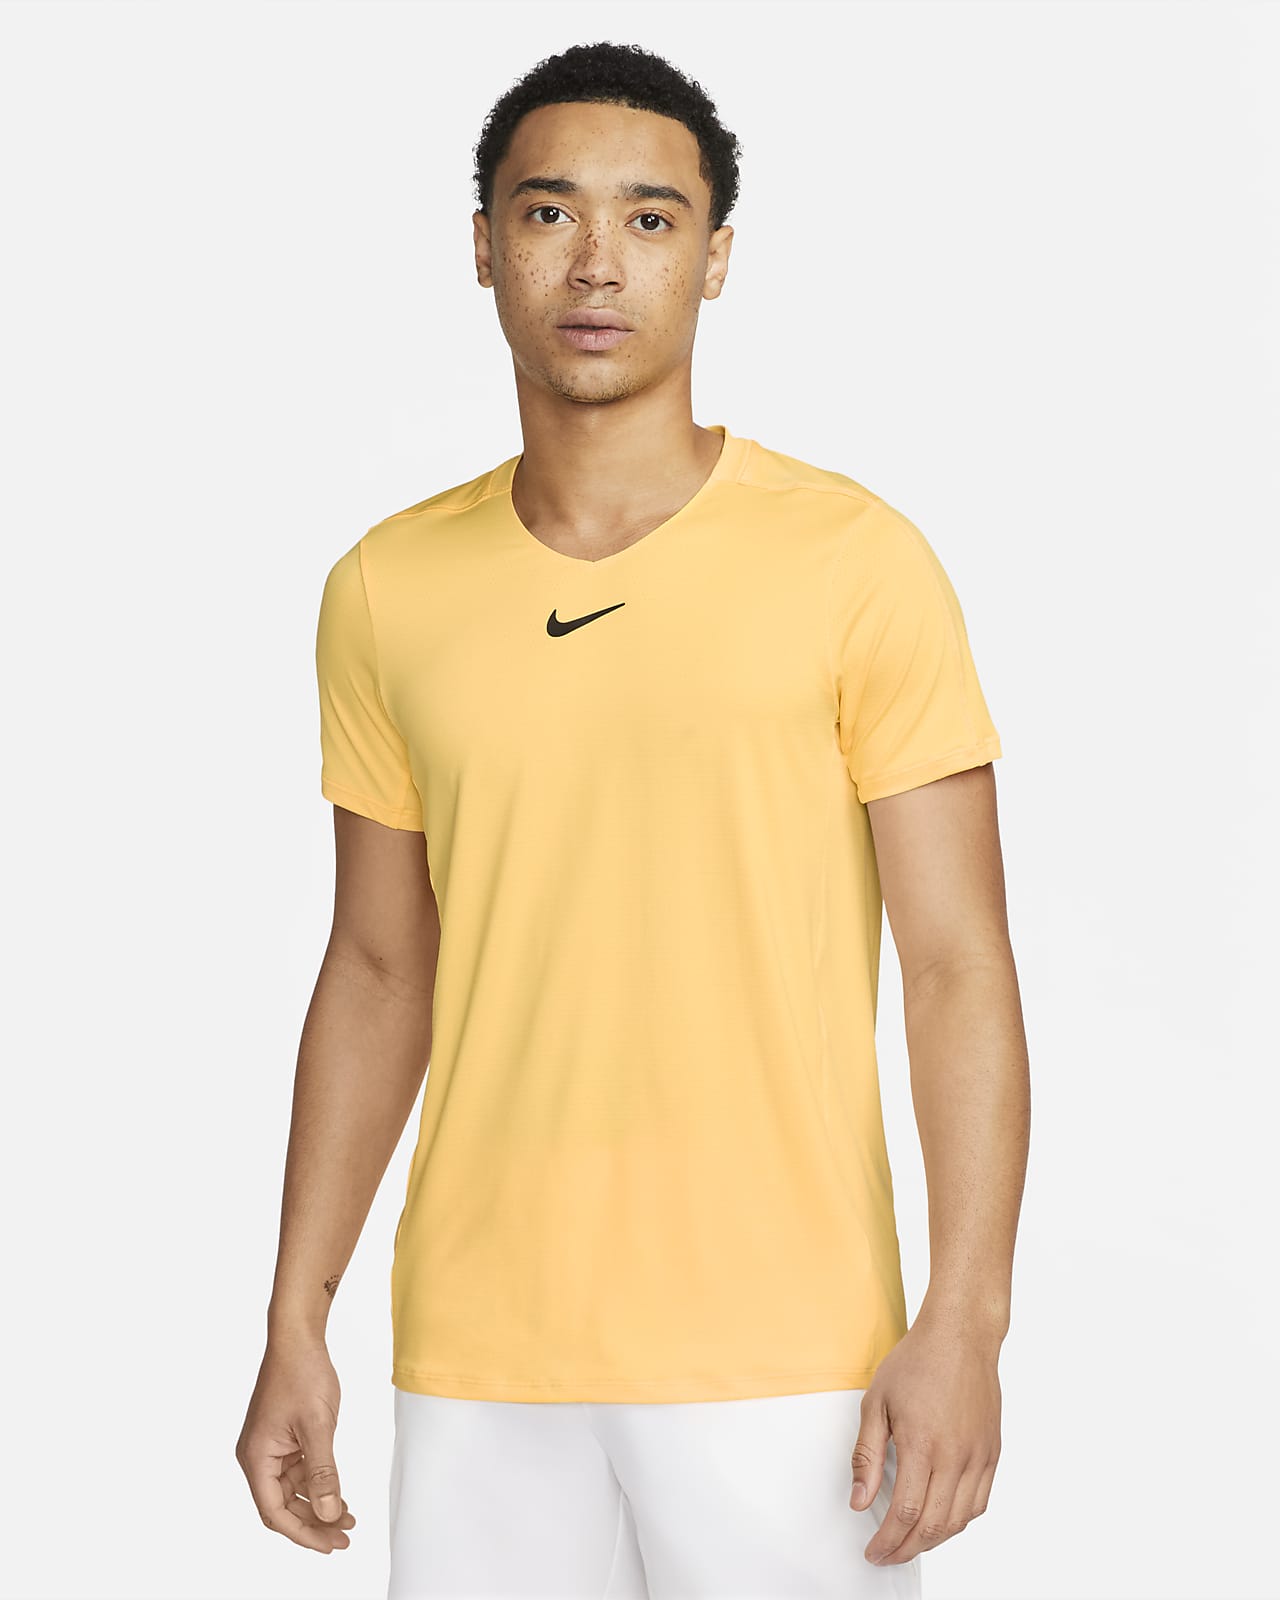 Más bien interrumpir trolebús NikeCourt Dri-FIT Advantage Camiseta de tenis - Hombre. Nike ES